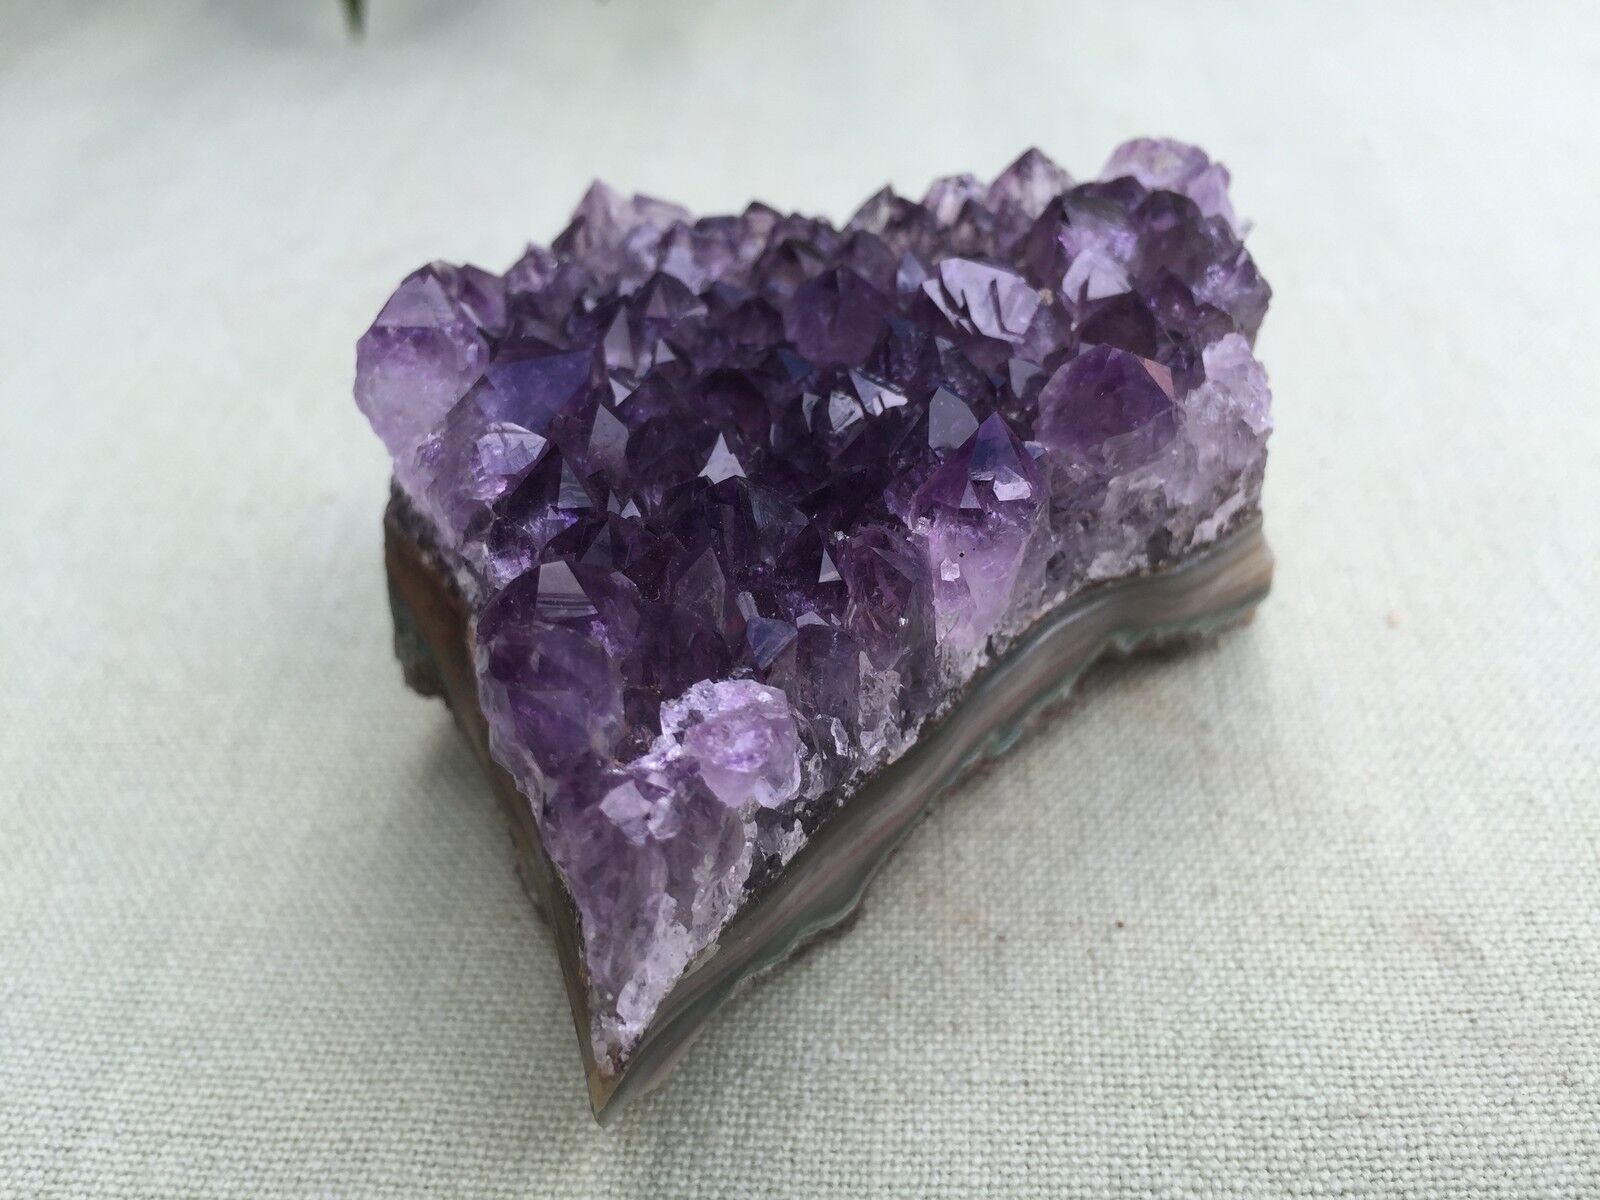 1 Amethyst Geode Crystal Quartz Amethyst Druze Cluster Gemstone Specimen Uruguay